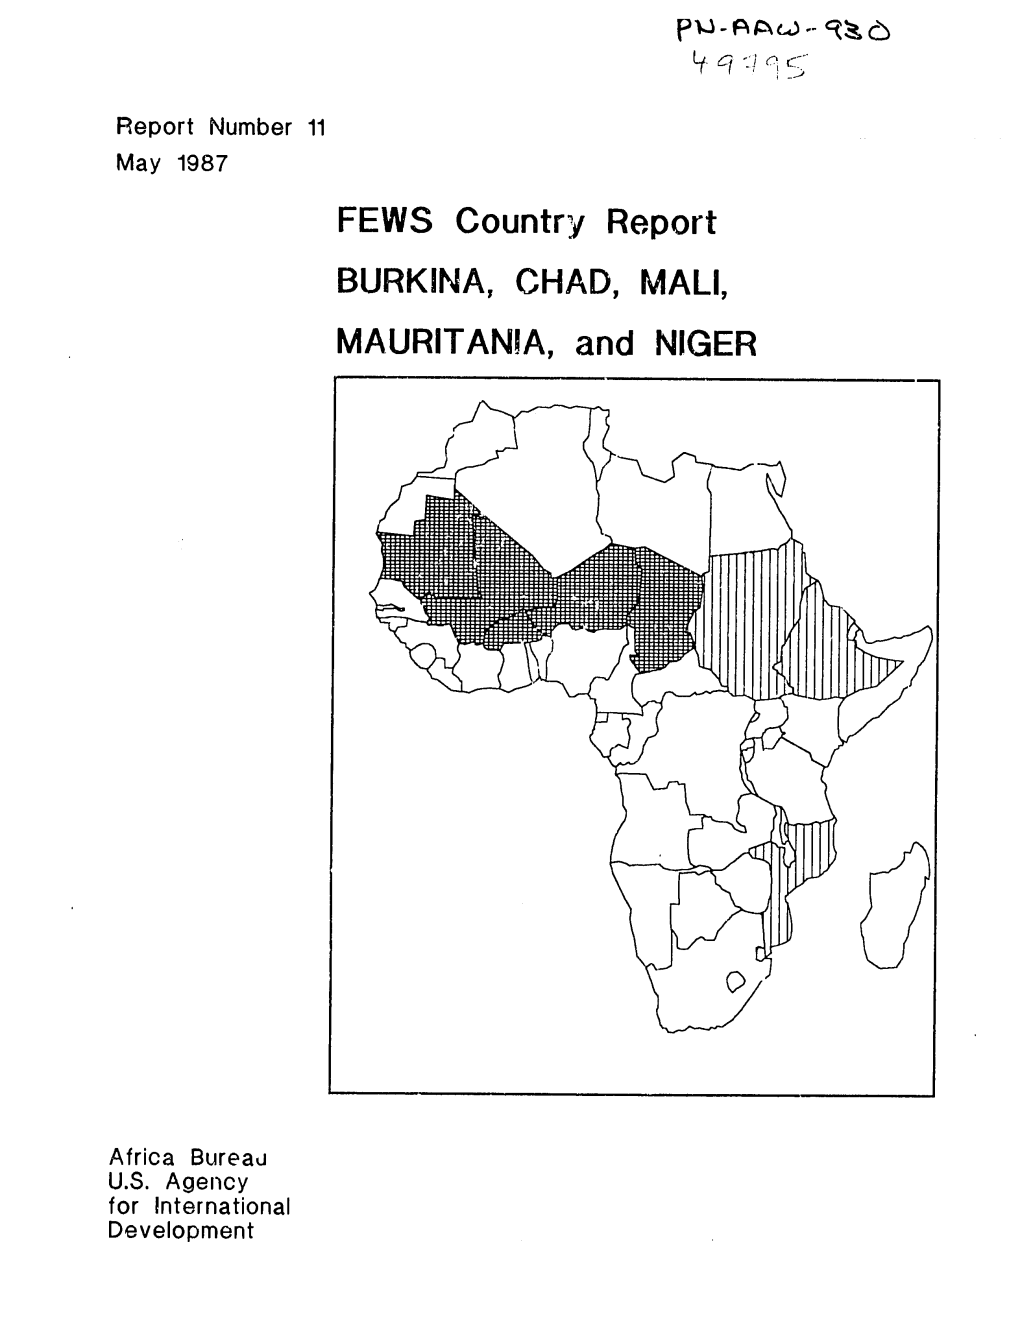 FEWS Country Report BURKINA, CHAD, MALI, MAURITANIA, and NIGER